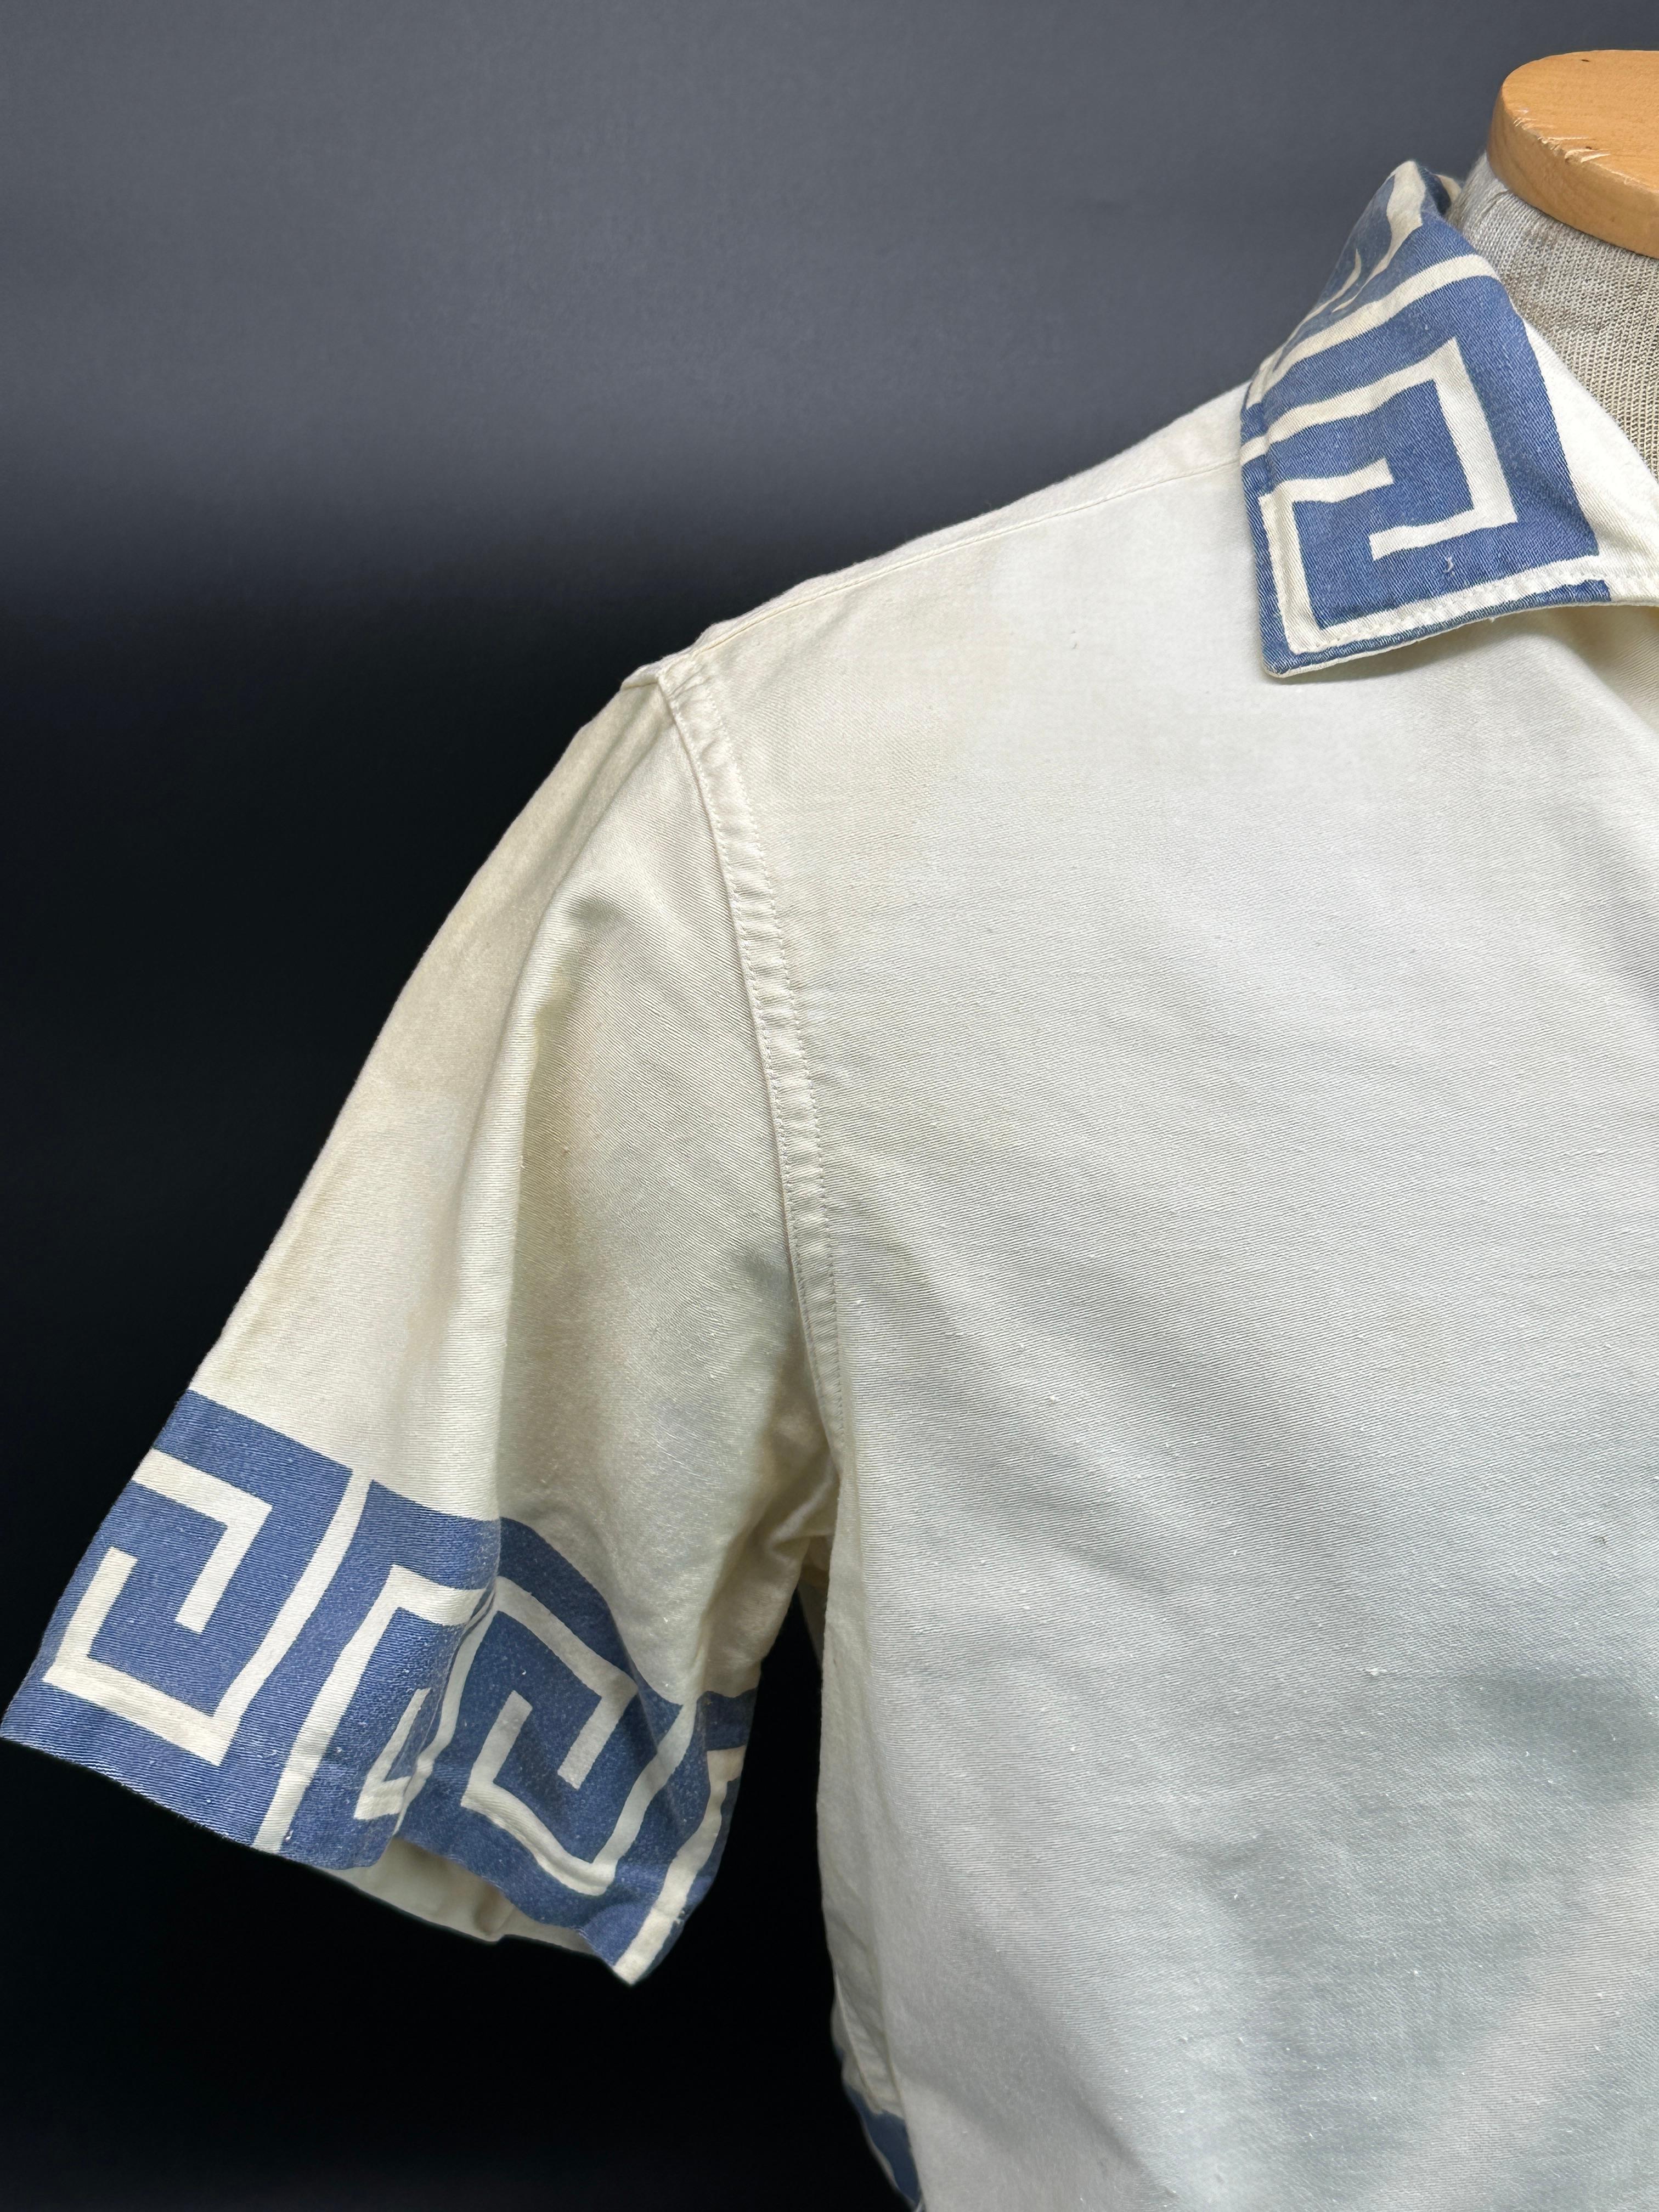 Vintage Bud Berma Shirt-Made in USA